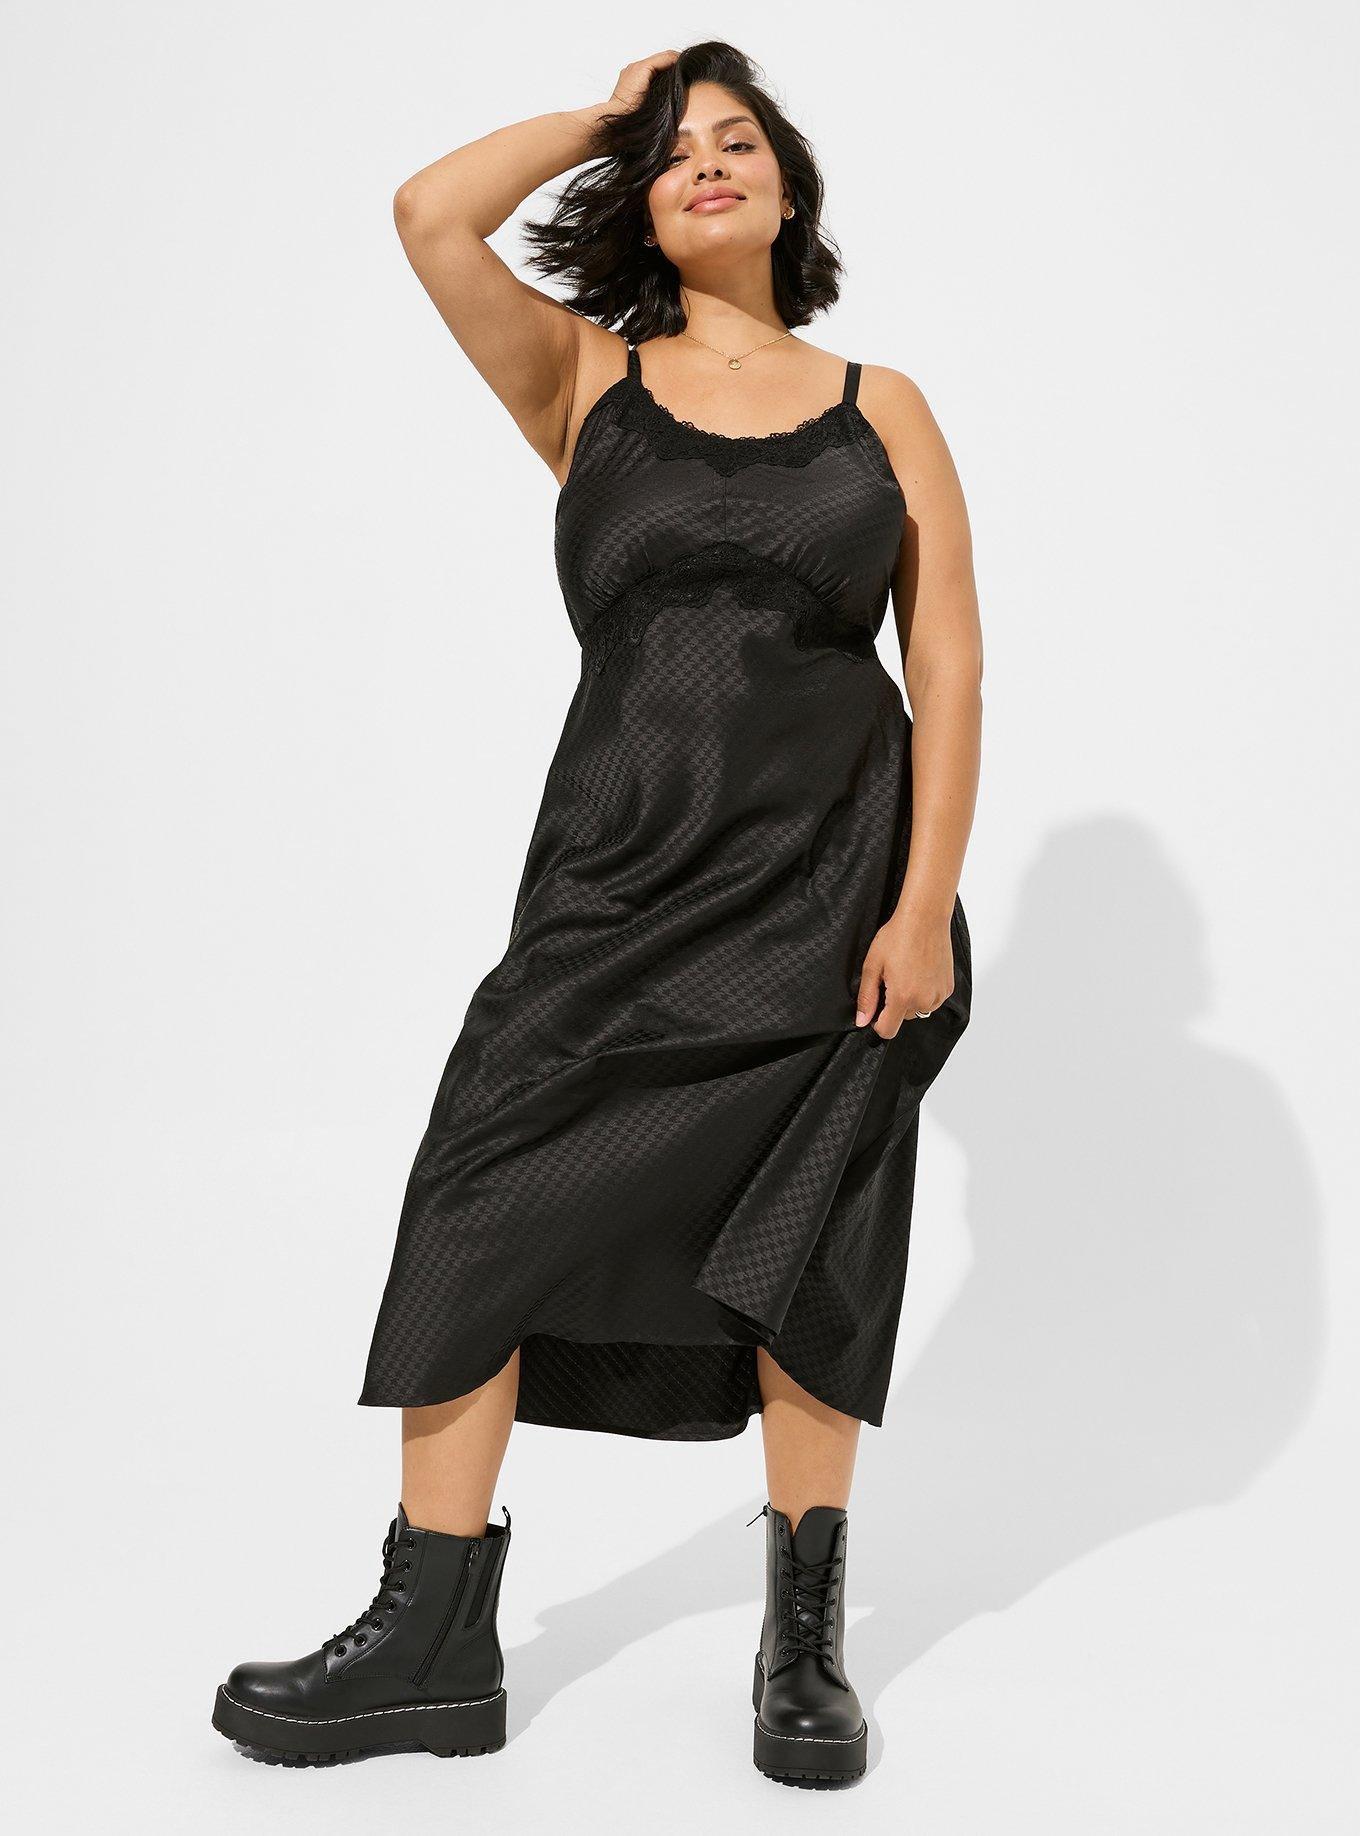 Torrid 5x 360 Smoothing Slip Dress Shapewear Dress Black Slip Dress NEW!